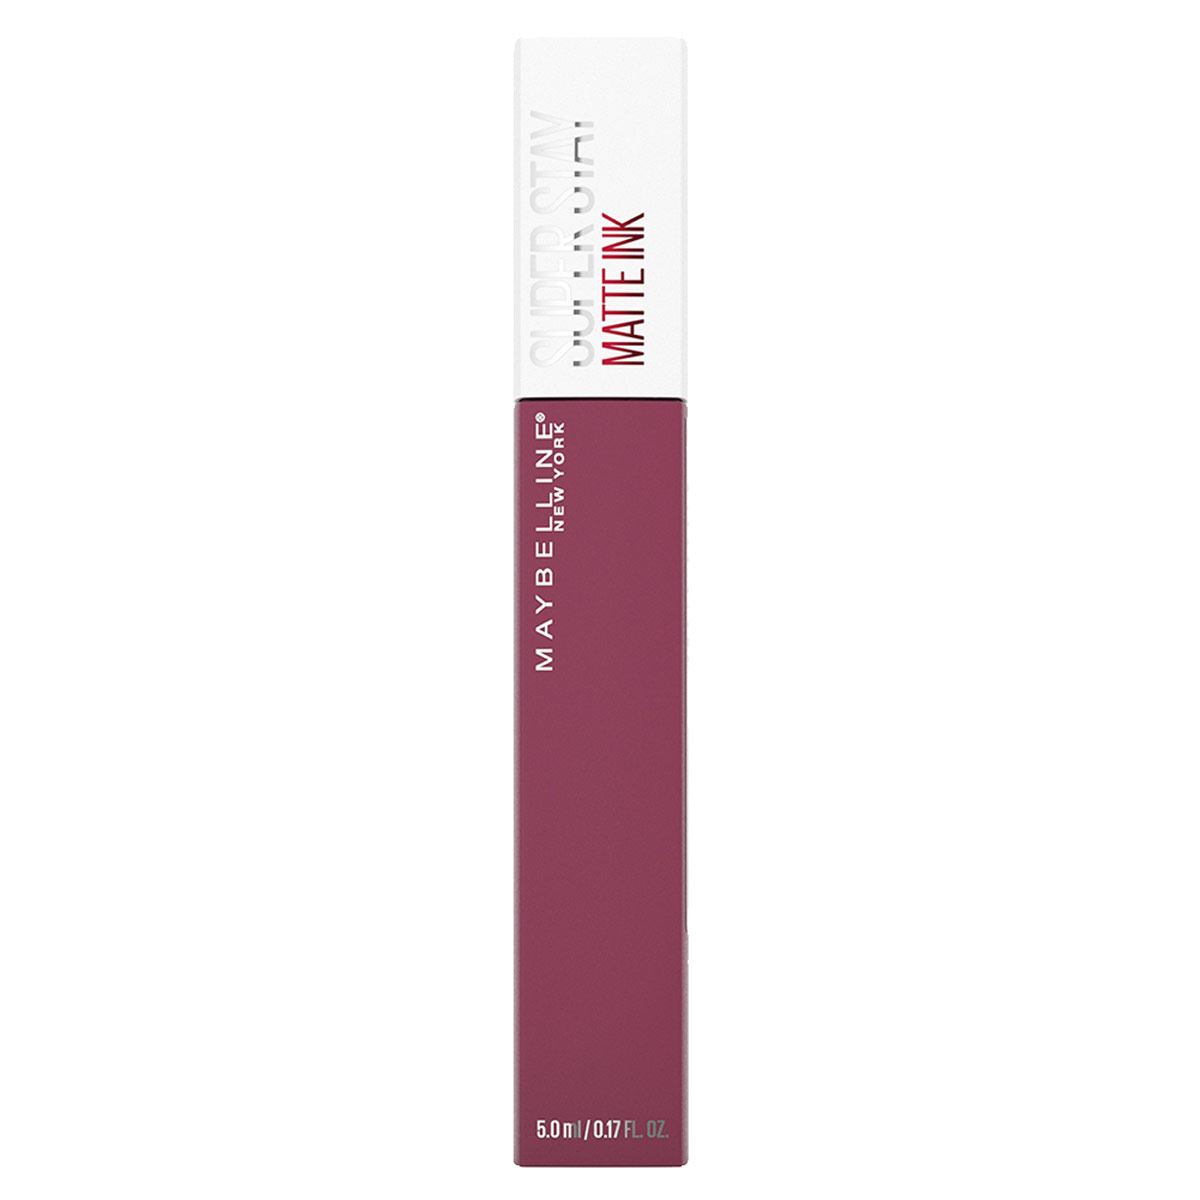 Labial líquido matte larga duración Superstay Matte Pink Edition Maybelline, Pink Savant